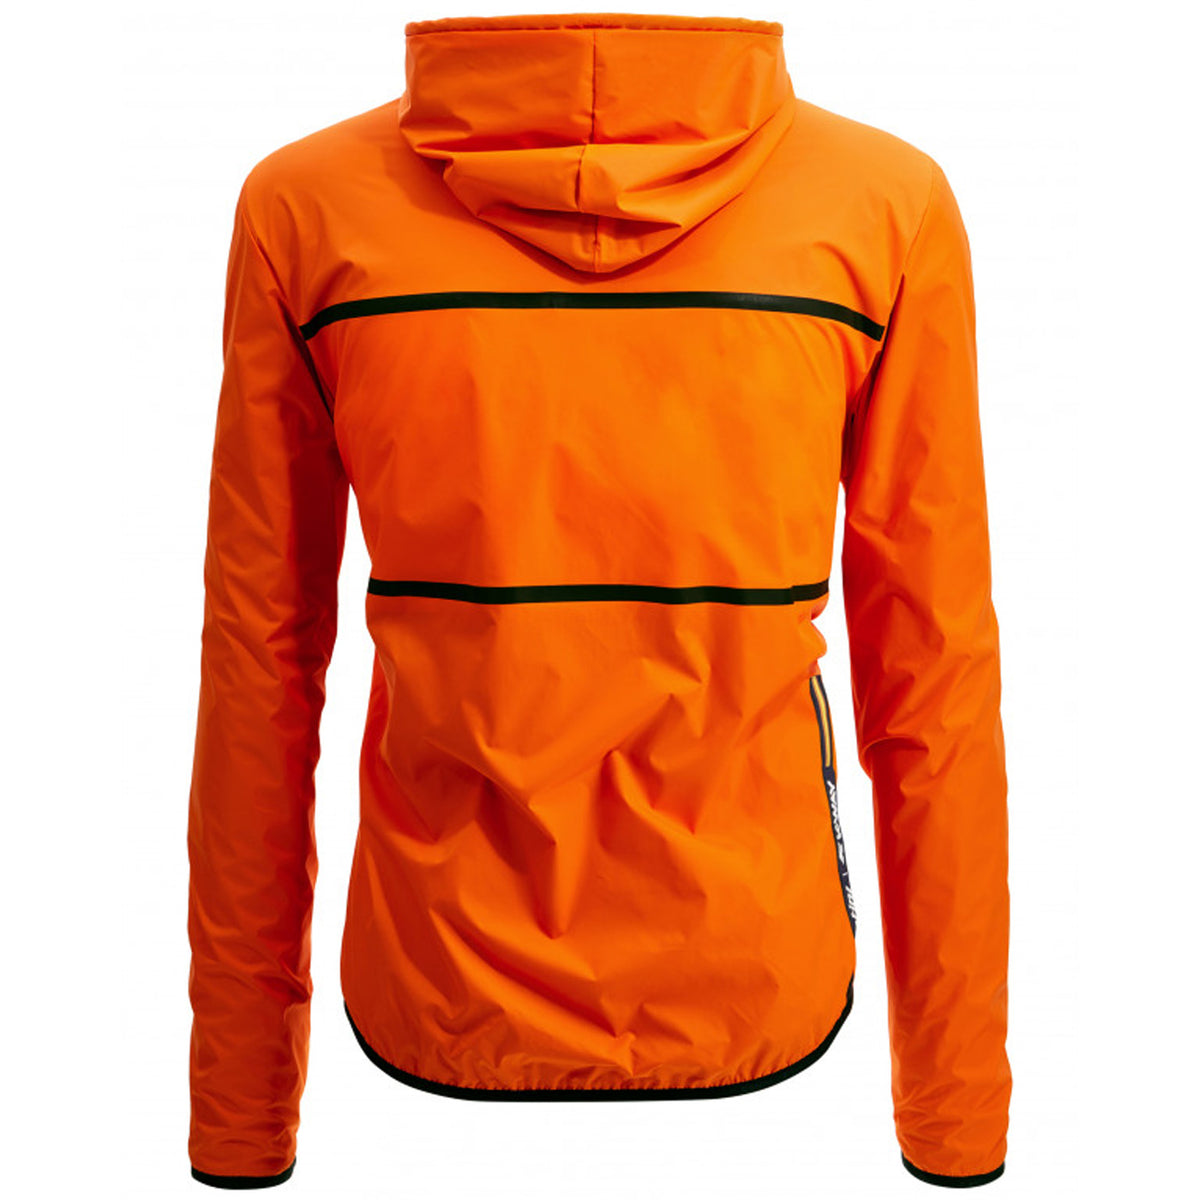 Santini X K Way Reversible Windproof Jacket Orange All4cycling